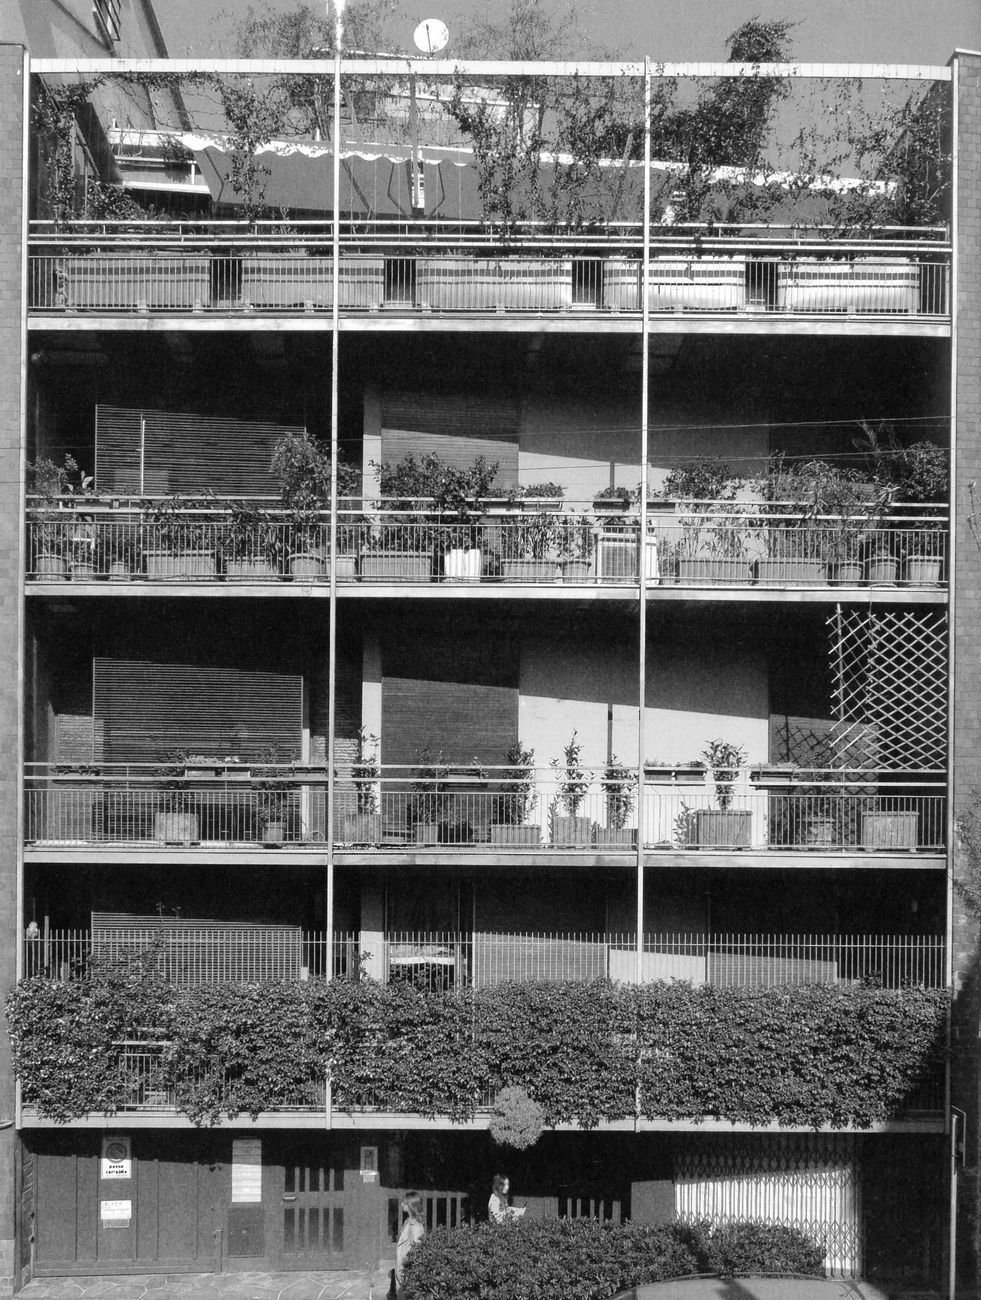 Ghidini, Mozzoni, Residenza in via Corridoni, Milano, 1956-59. Photo © Stefano Topuntoli